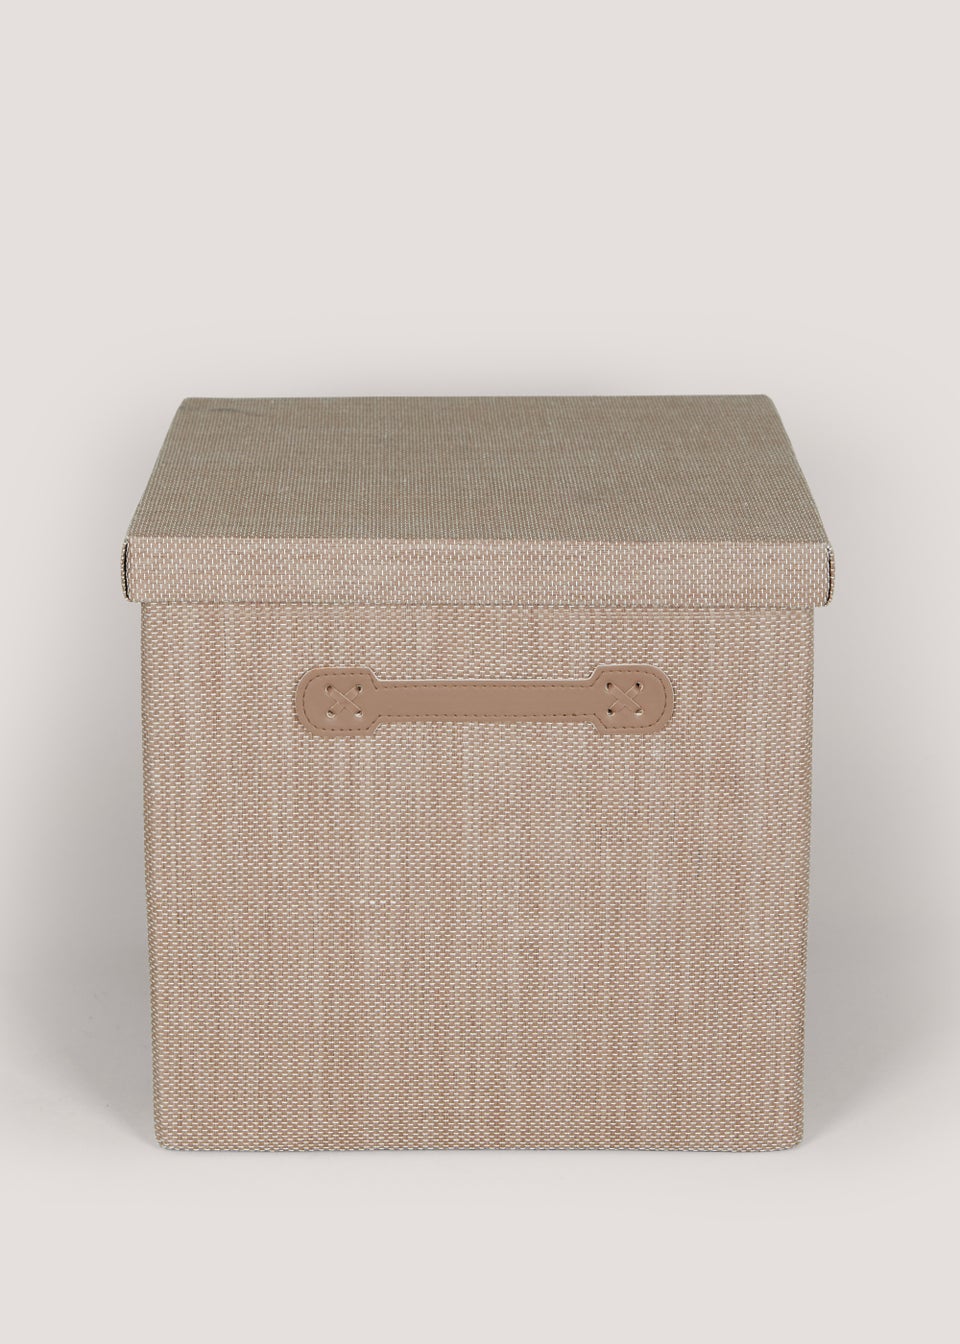 Taupe Foldable Storage Box (33cm x 33cm x 31cm)